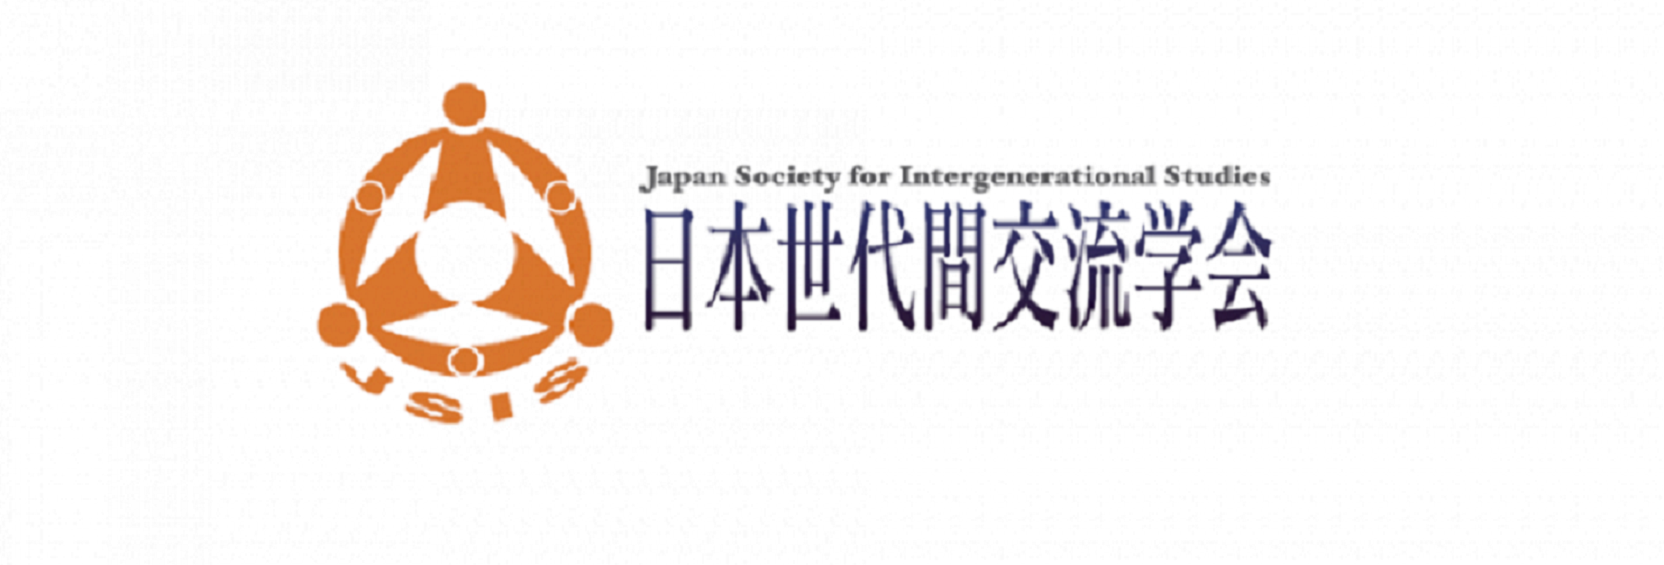 Logo Japanese Society for Intergenerational Studies